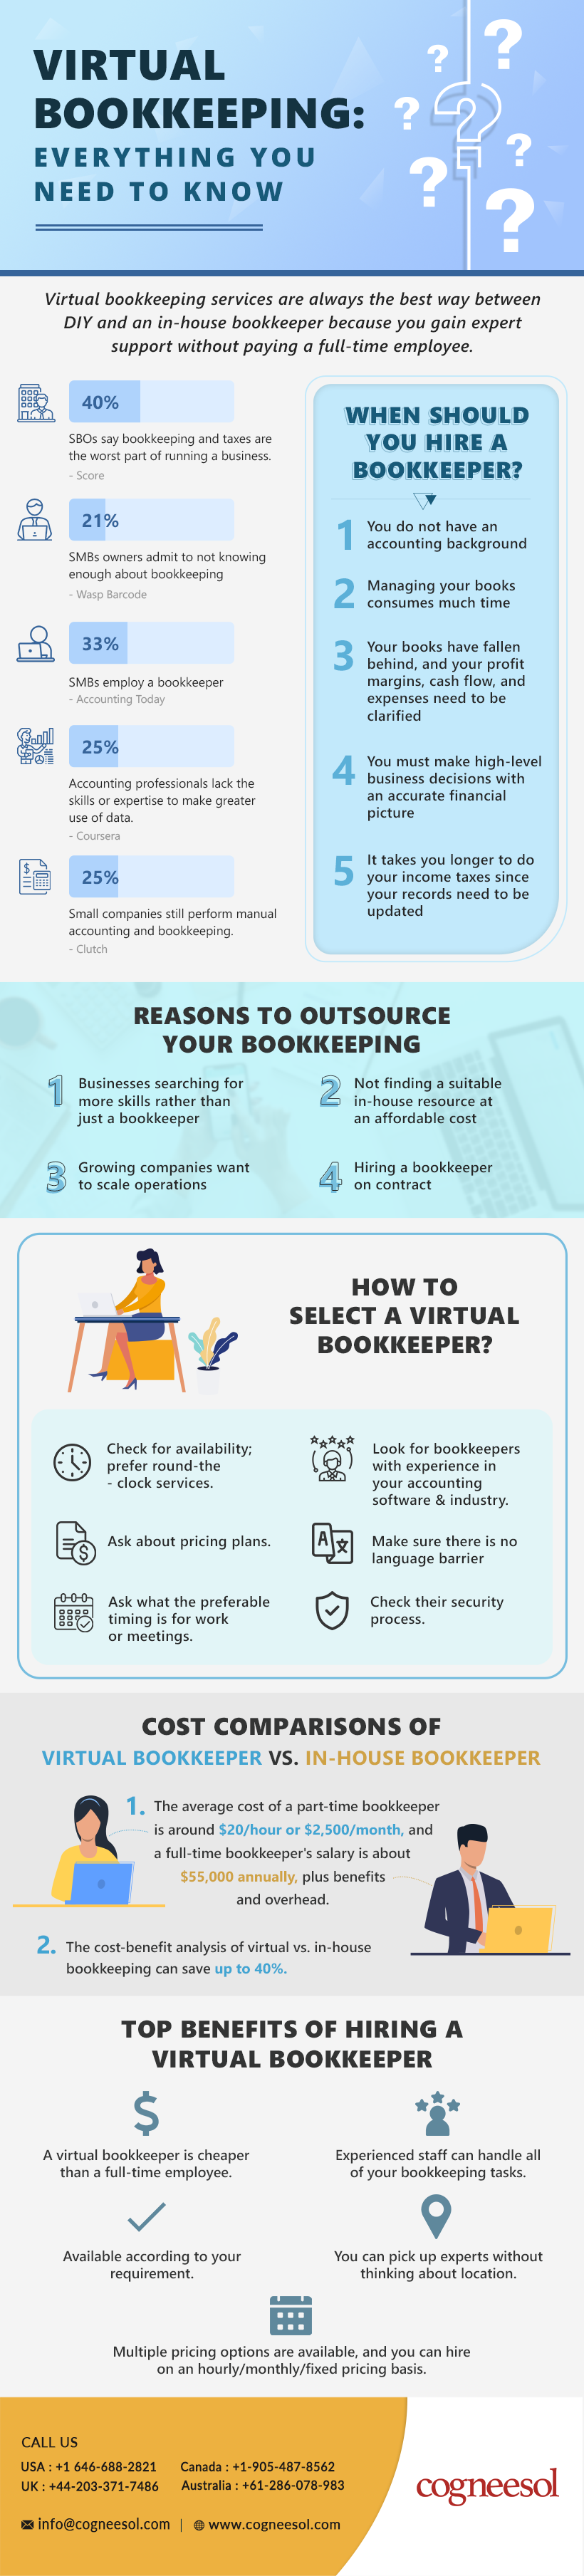 virtual bookkeeping info